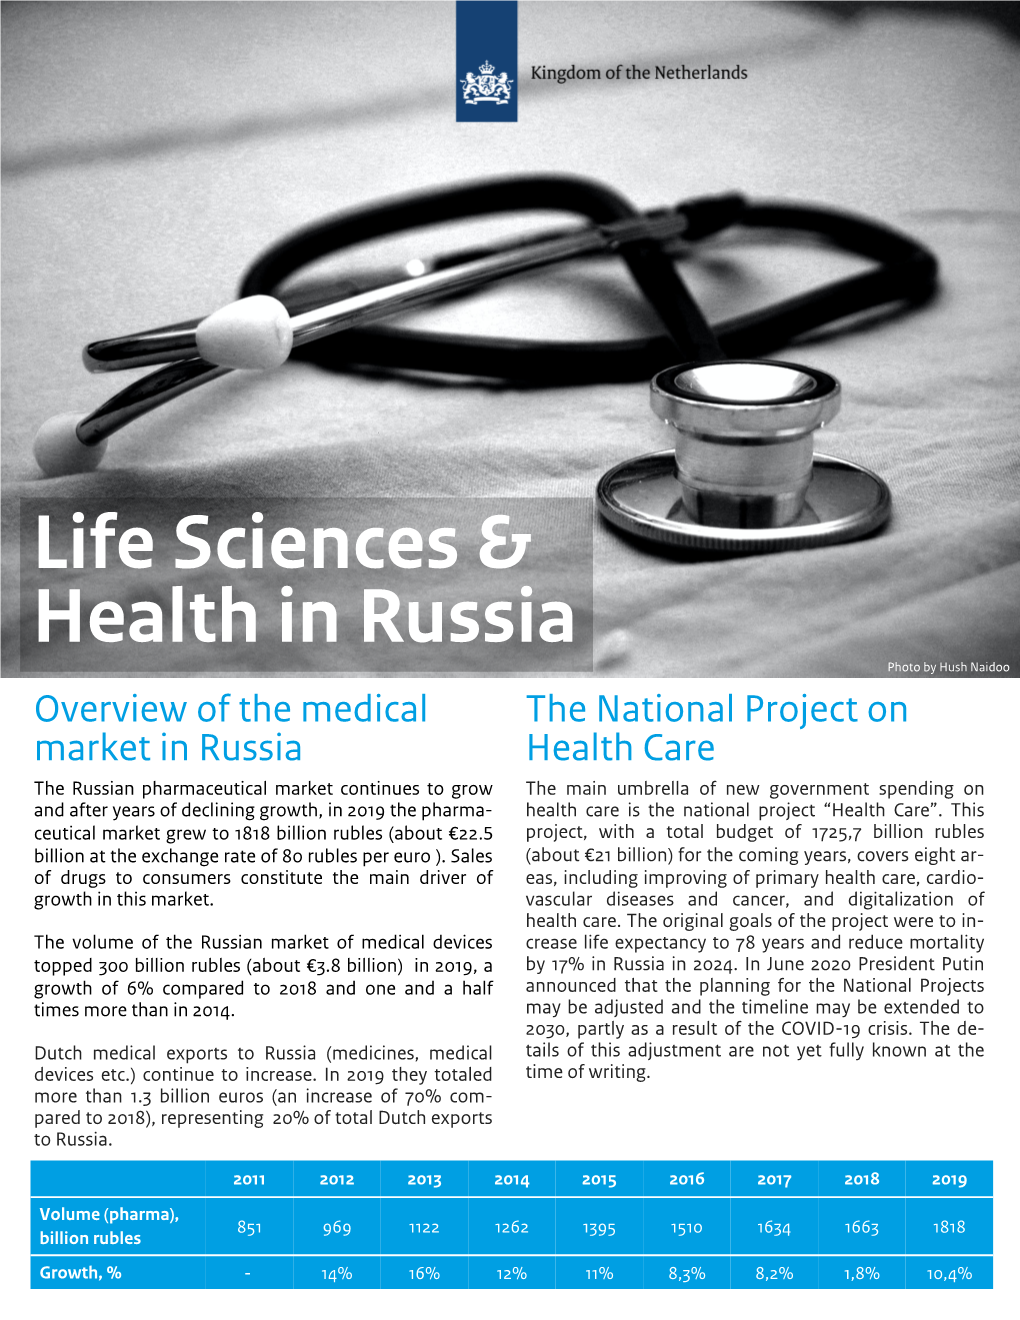 Factsheet on Life Sciences & Health in Russia